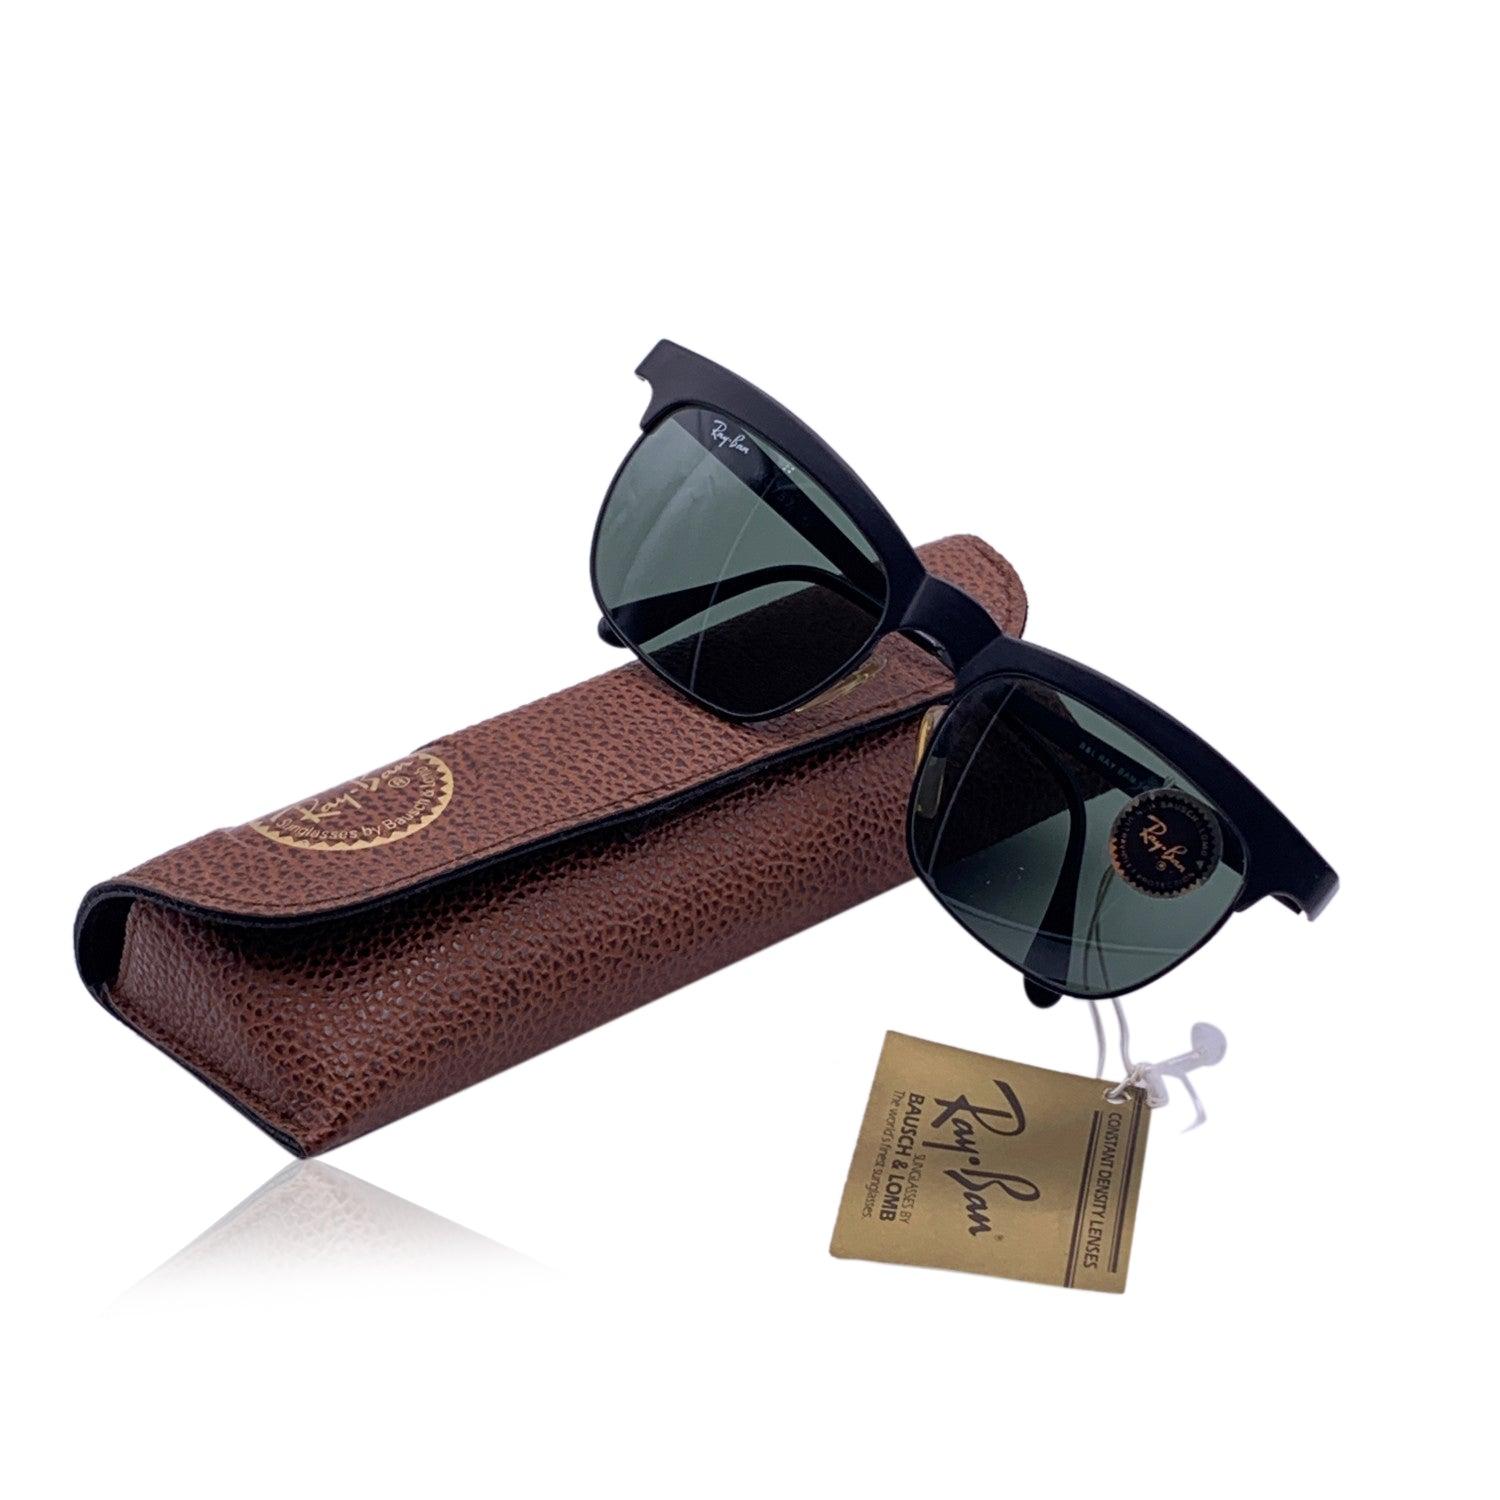 Vintage sunglasses by Ray-Ban Bausch & Lomb, mod. Wayfarer - W0757.Black metal frame. Squared design. Gray G-15 Bausch & Lomb original lens, with BL etched on both corners. Made in France Details MATERIAL: Metal COLOR: Black MODEL: Wayfarer W0757